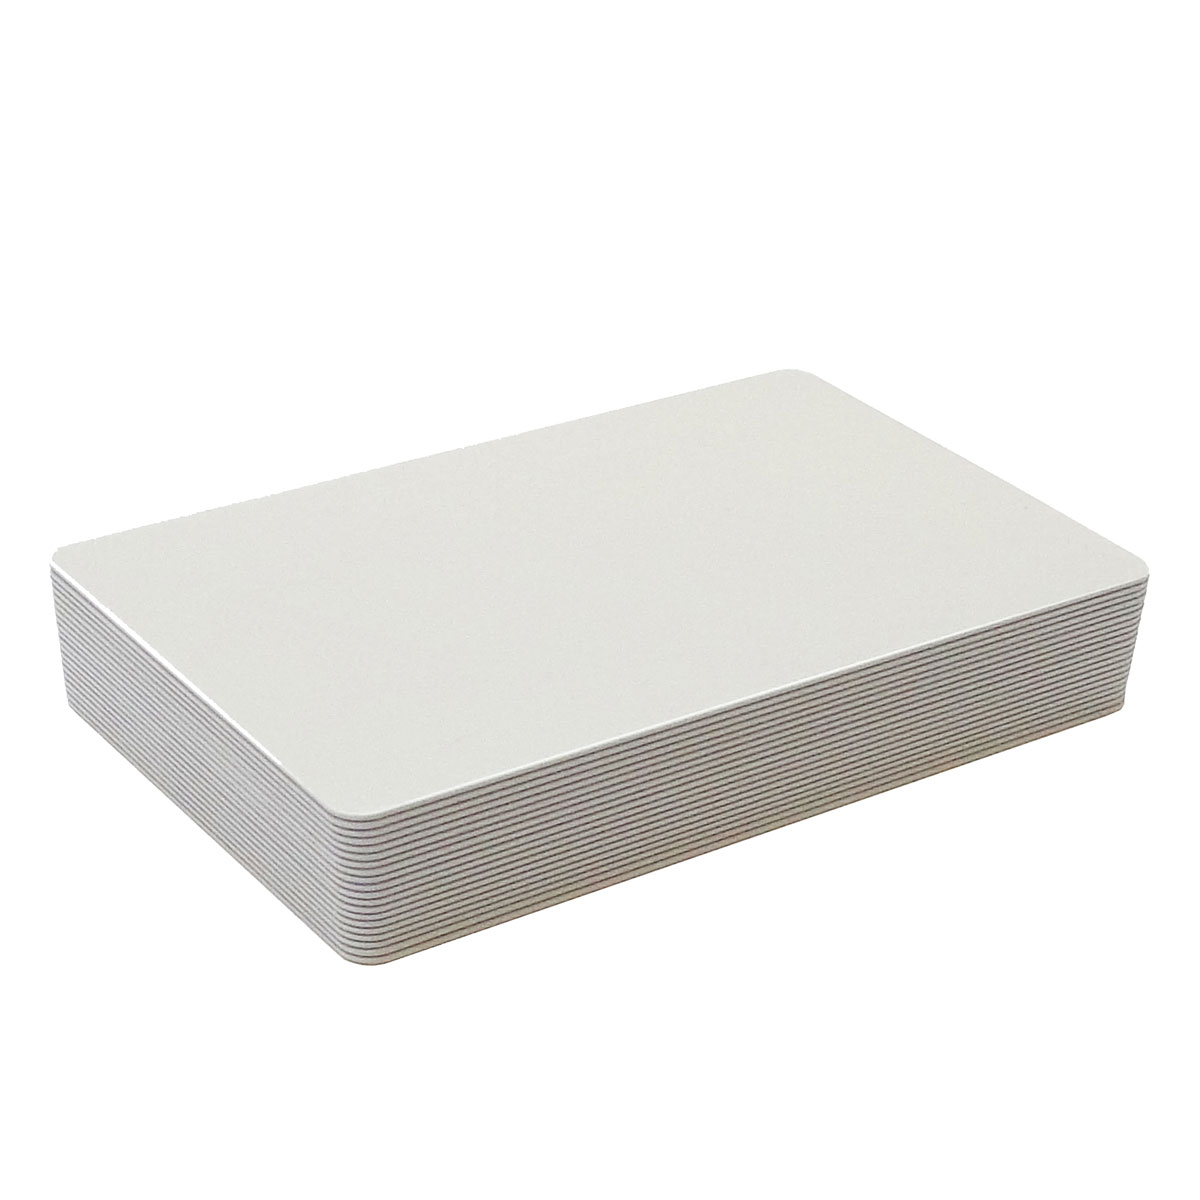 Preisschildkarten weiß, glänzend/glänzend, 0.5mm